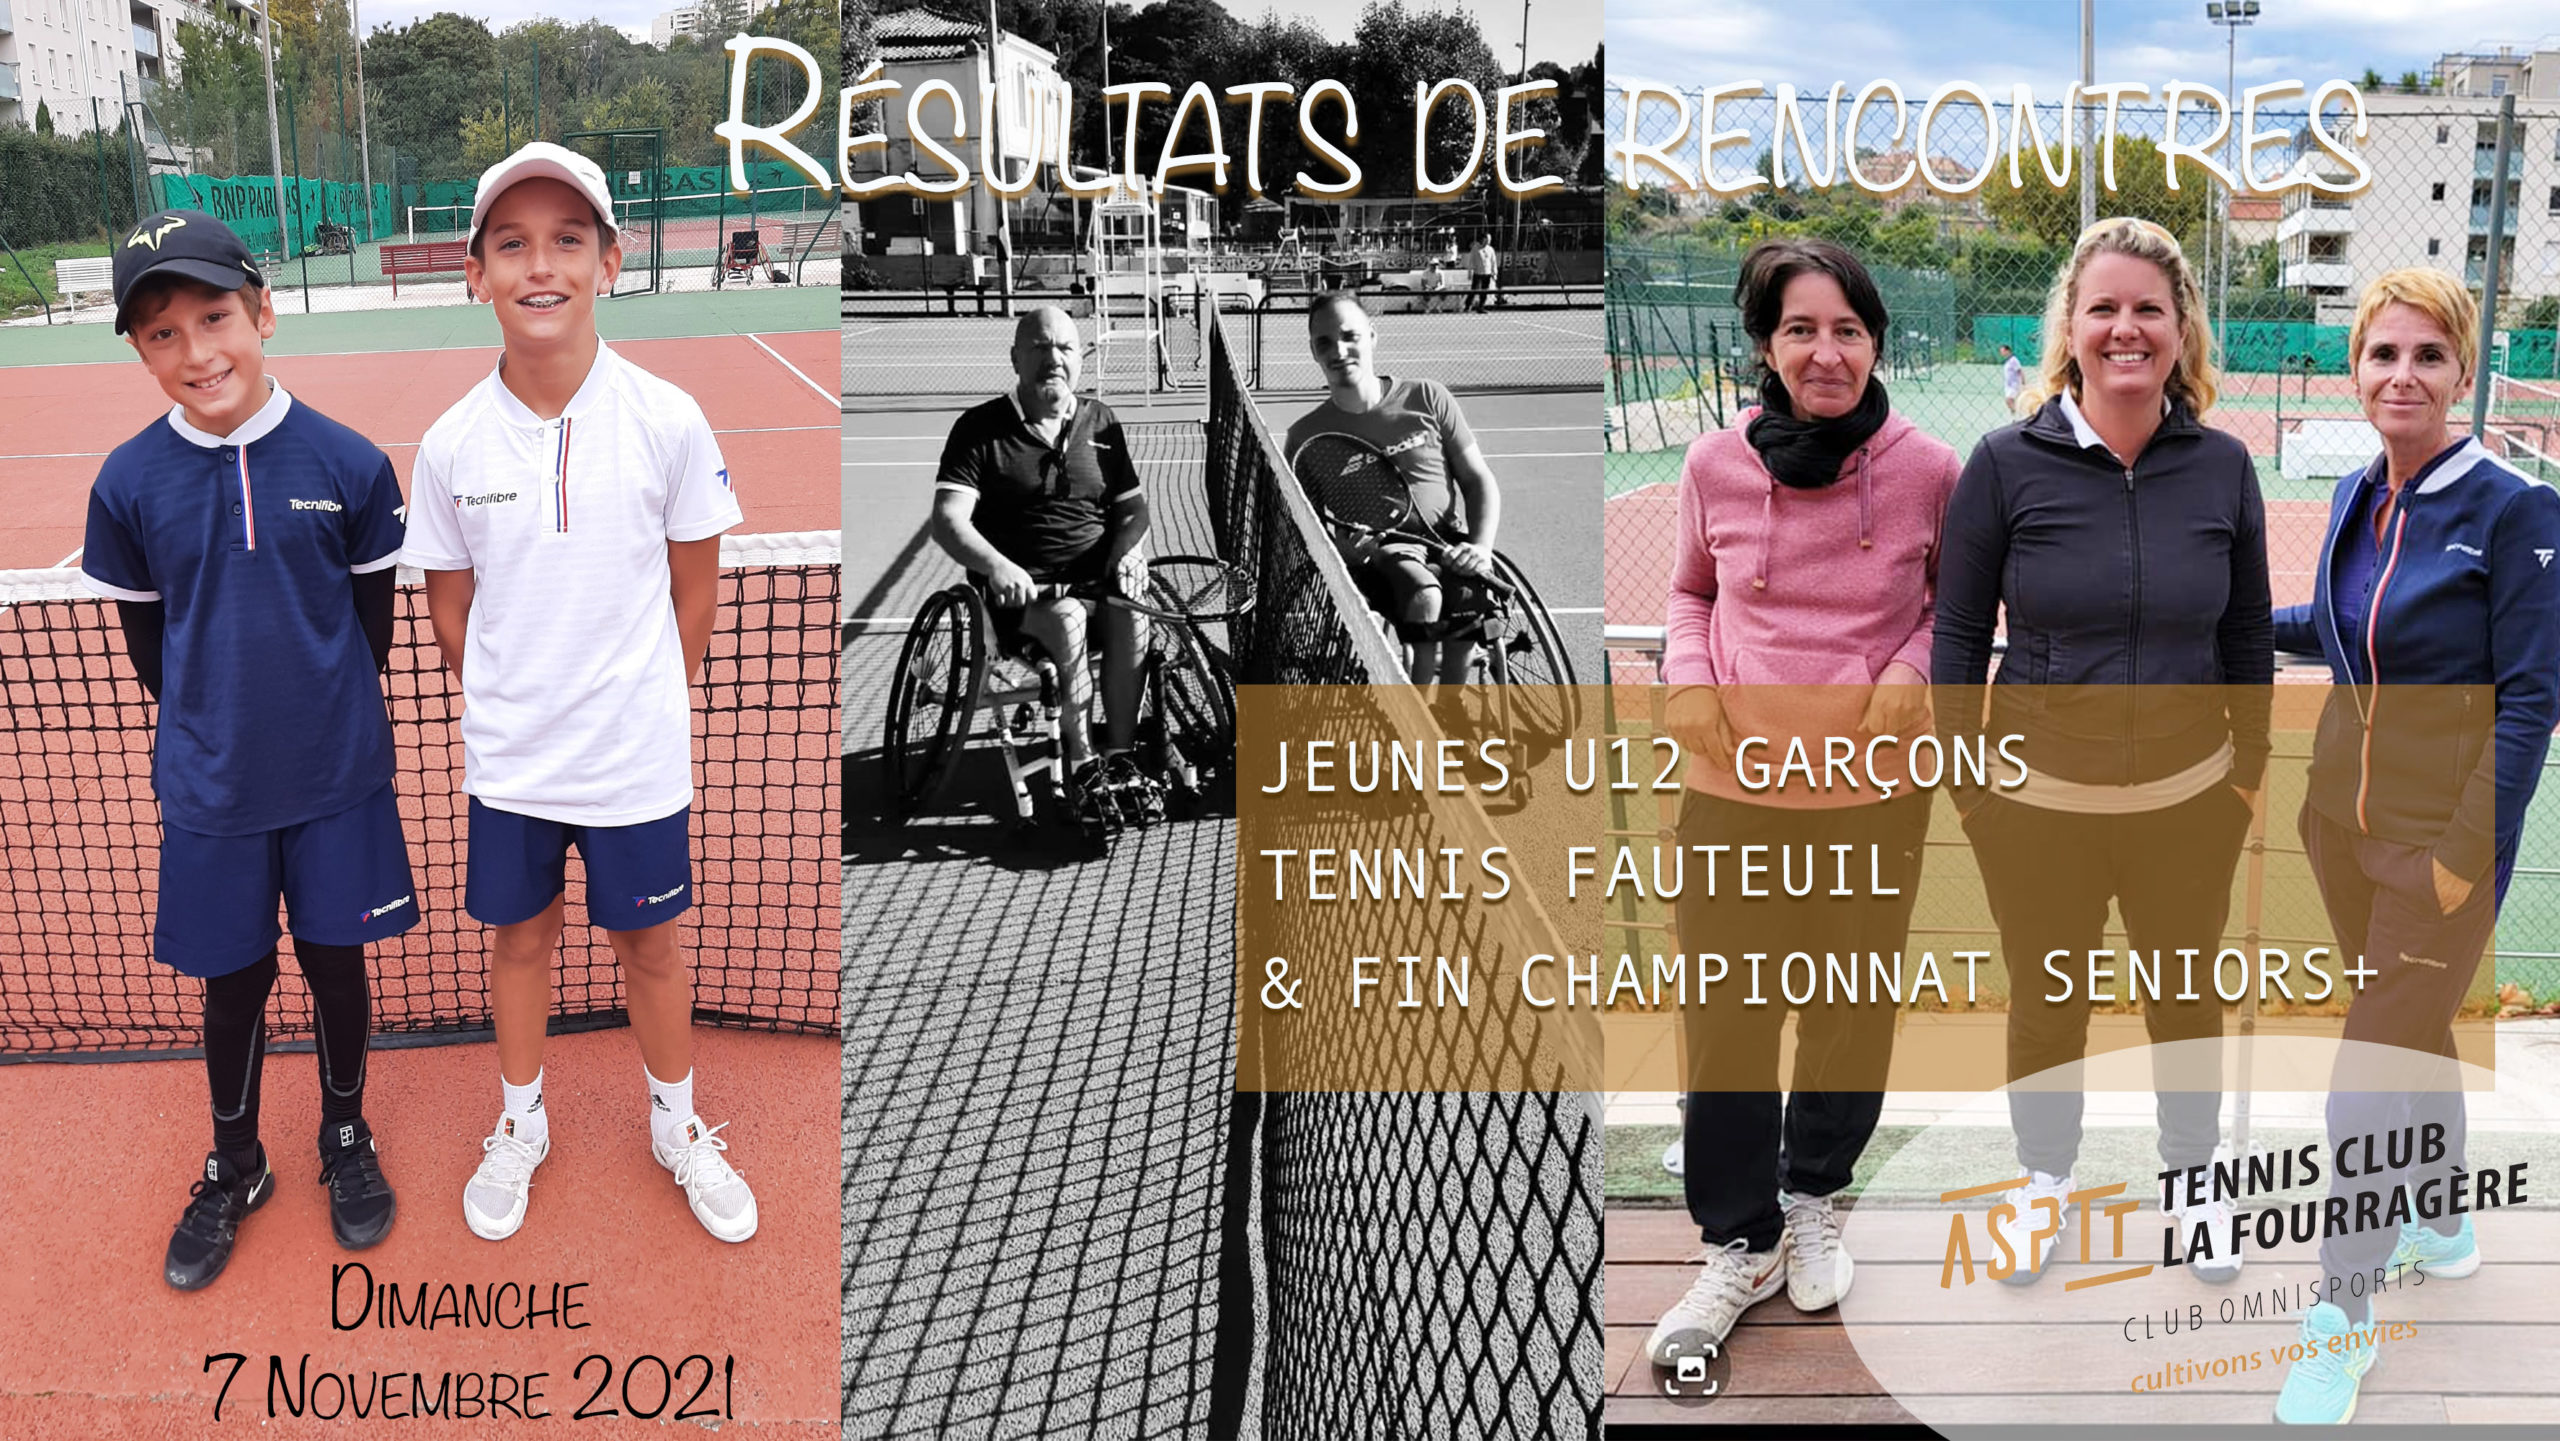 Ecole de Tennis - TC La Fourragère, club omnisports ASPTT